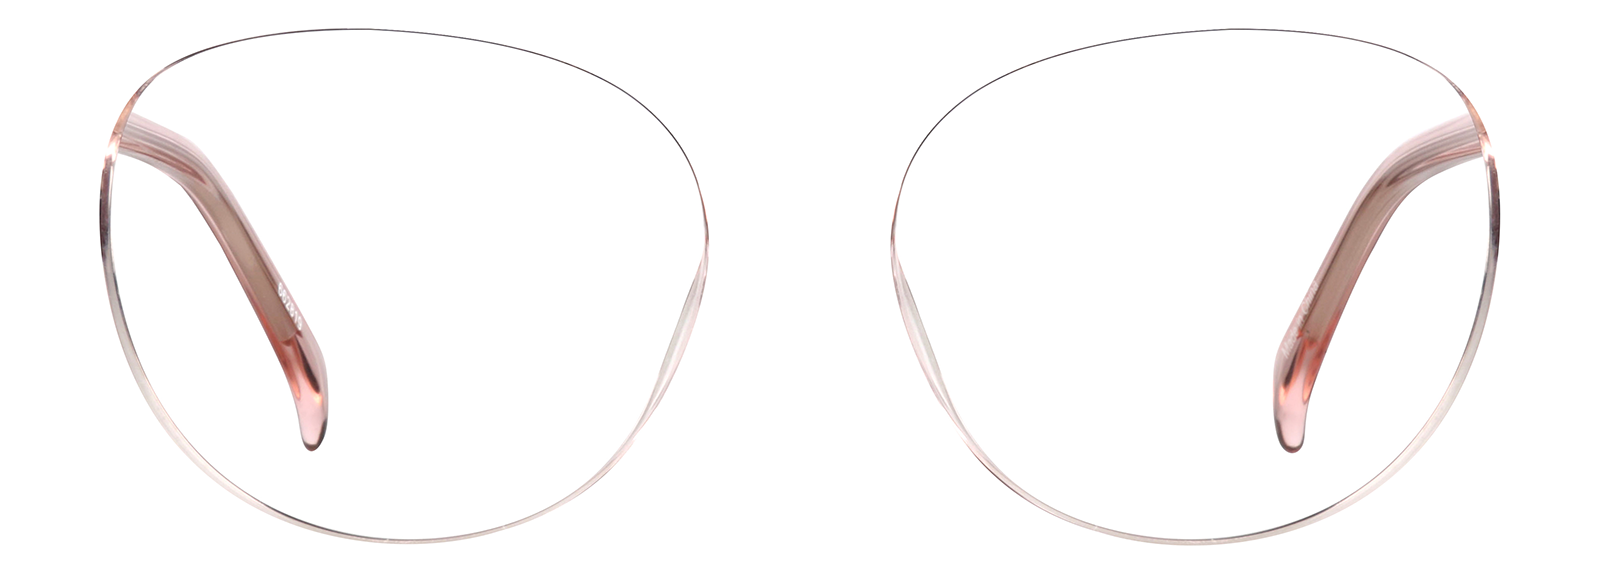 Round Glasseslens arm image